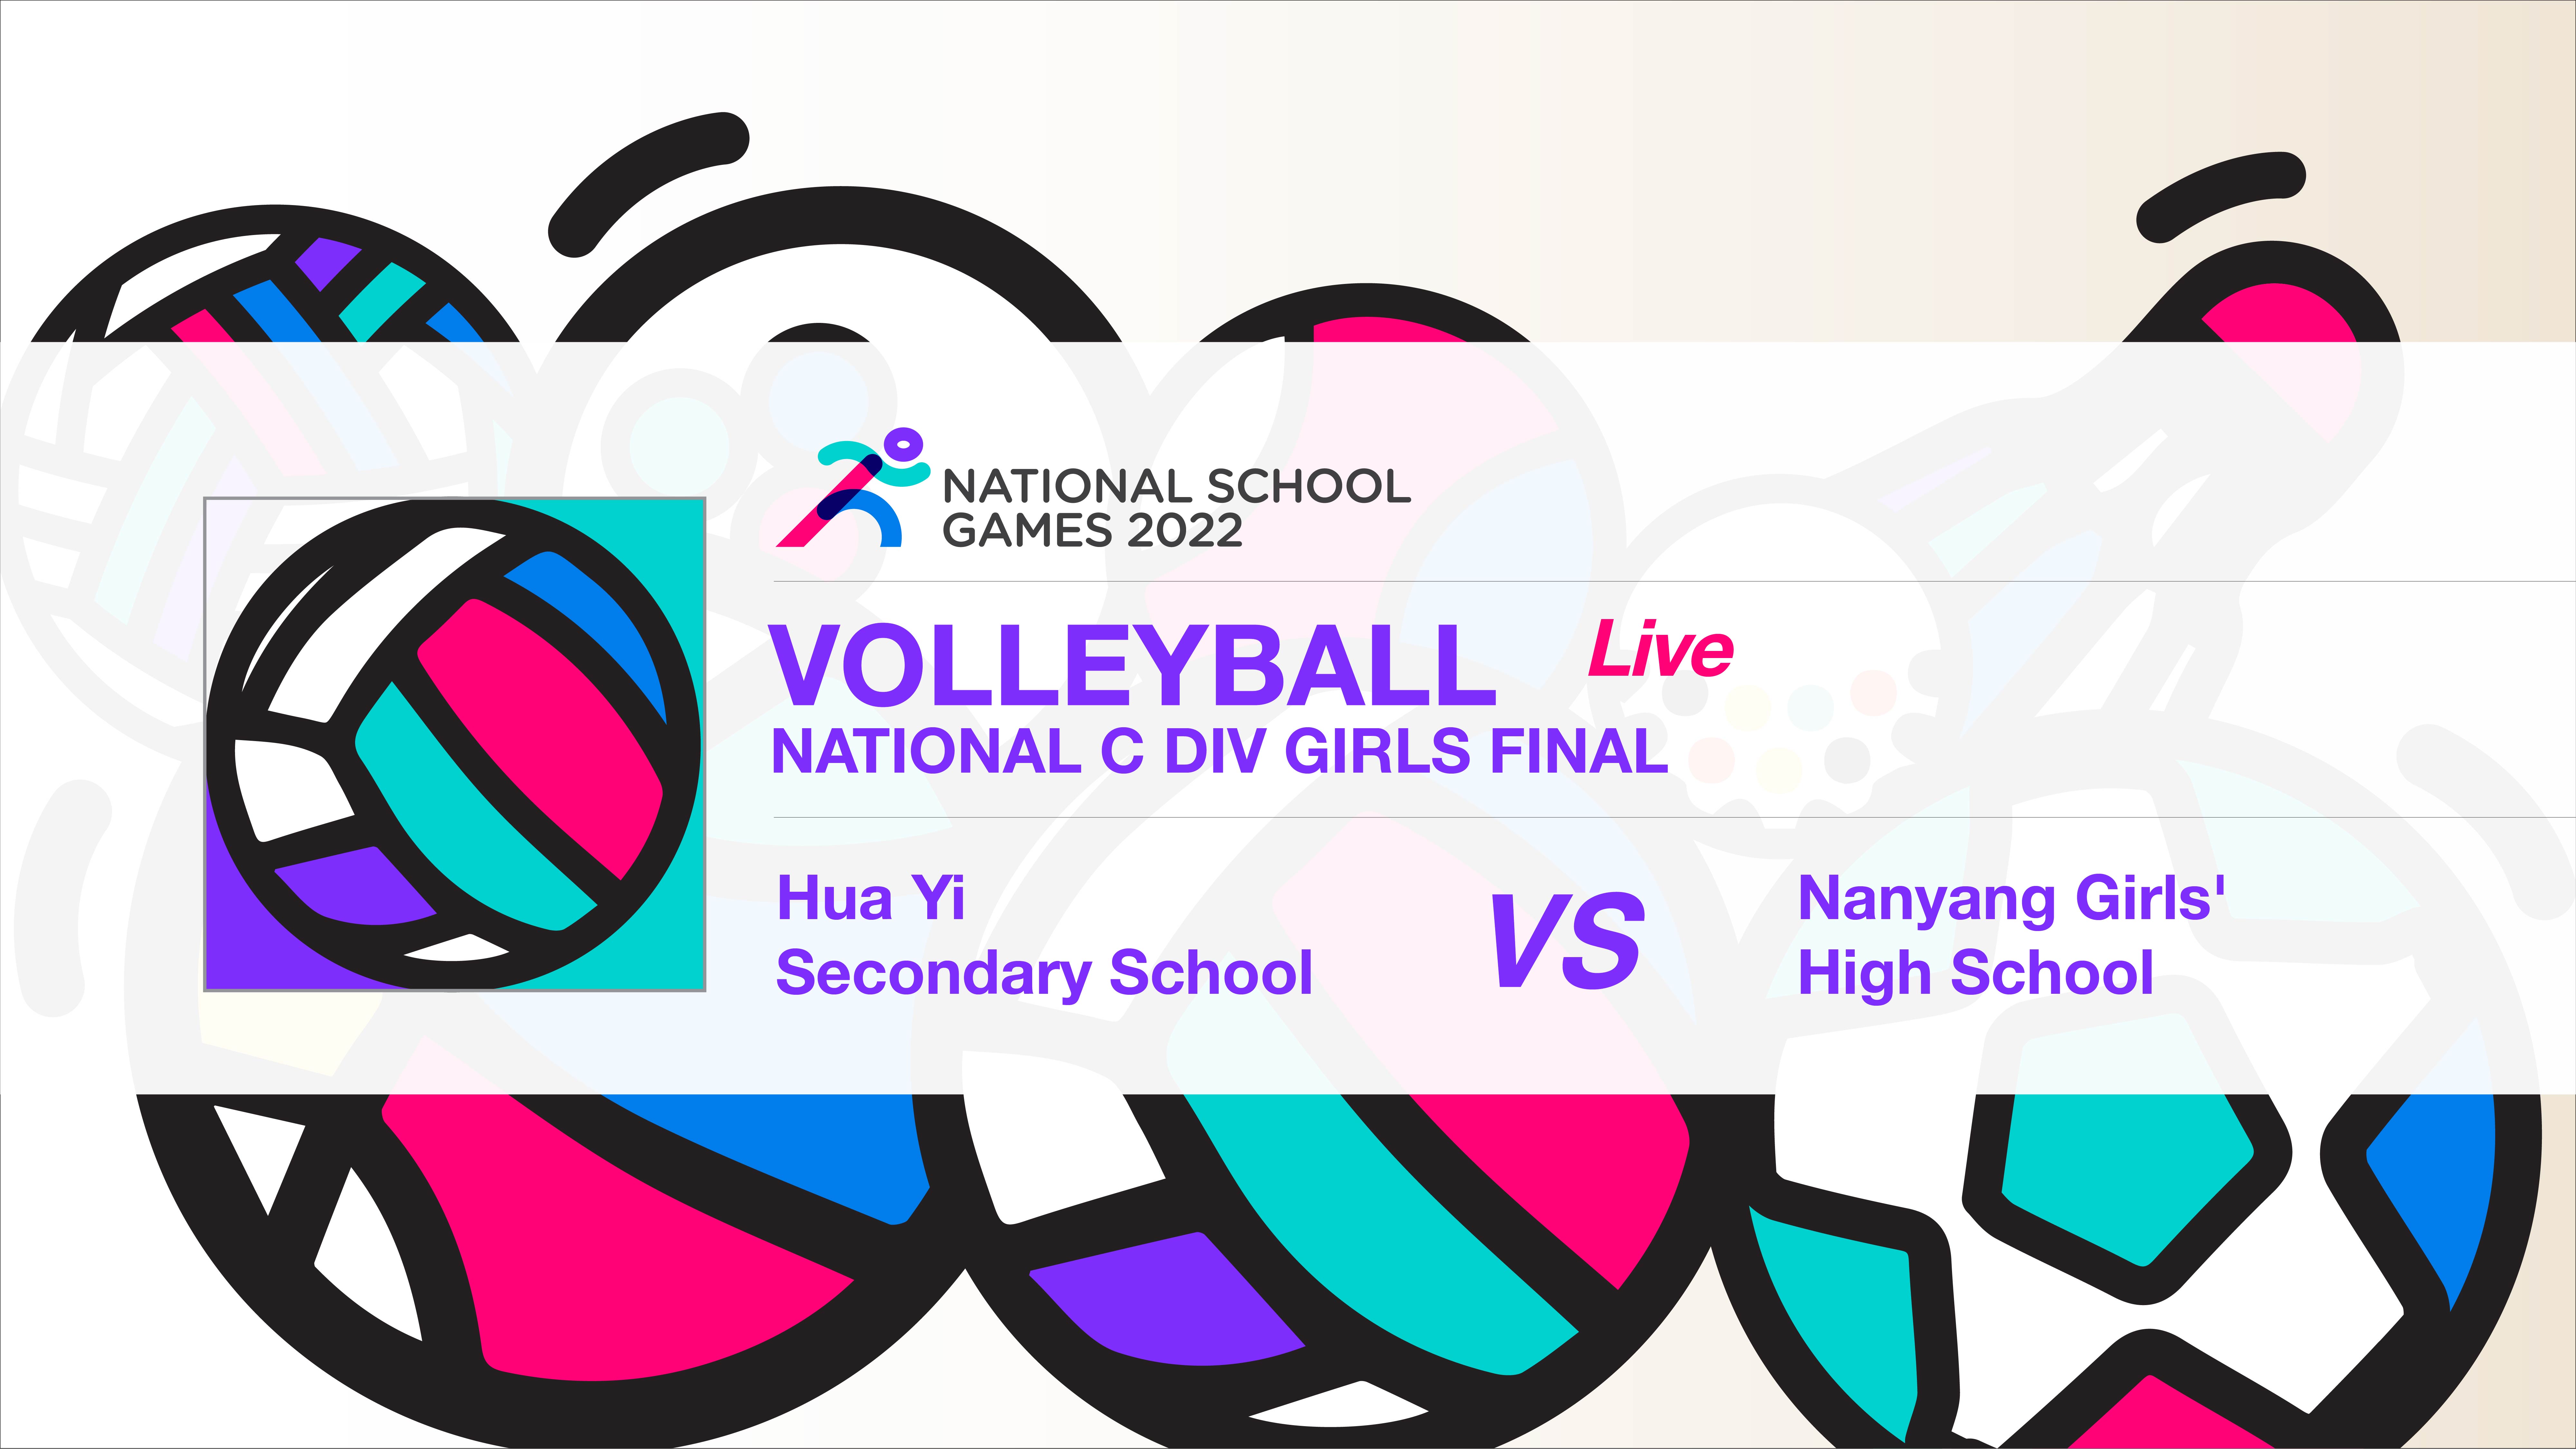 SSSC Volleyball National C Division Girls Final | Hua Yi Secondary School vs Nanyang Girls' High School